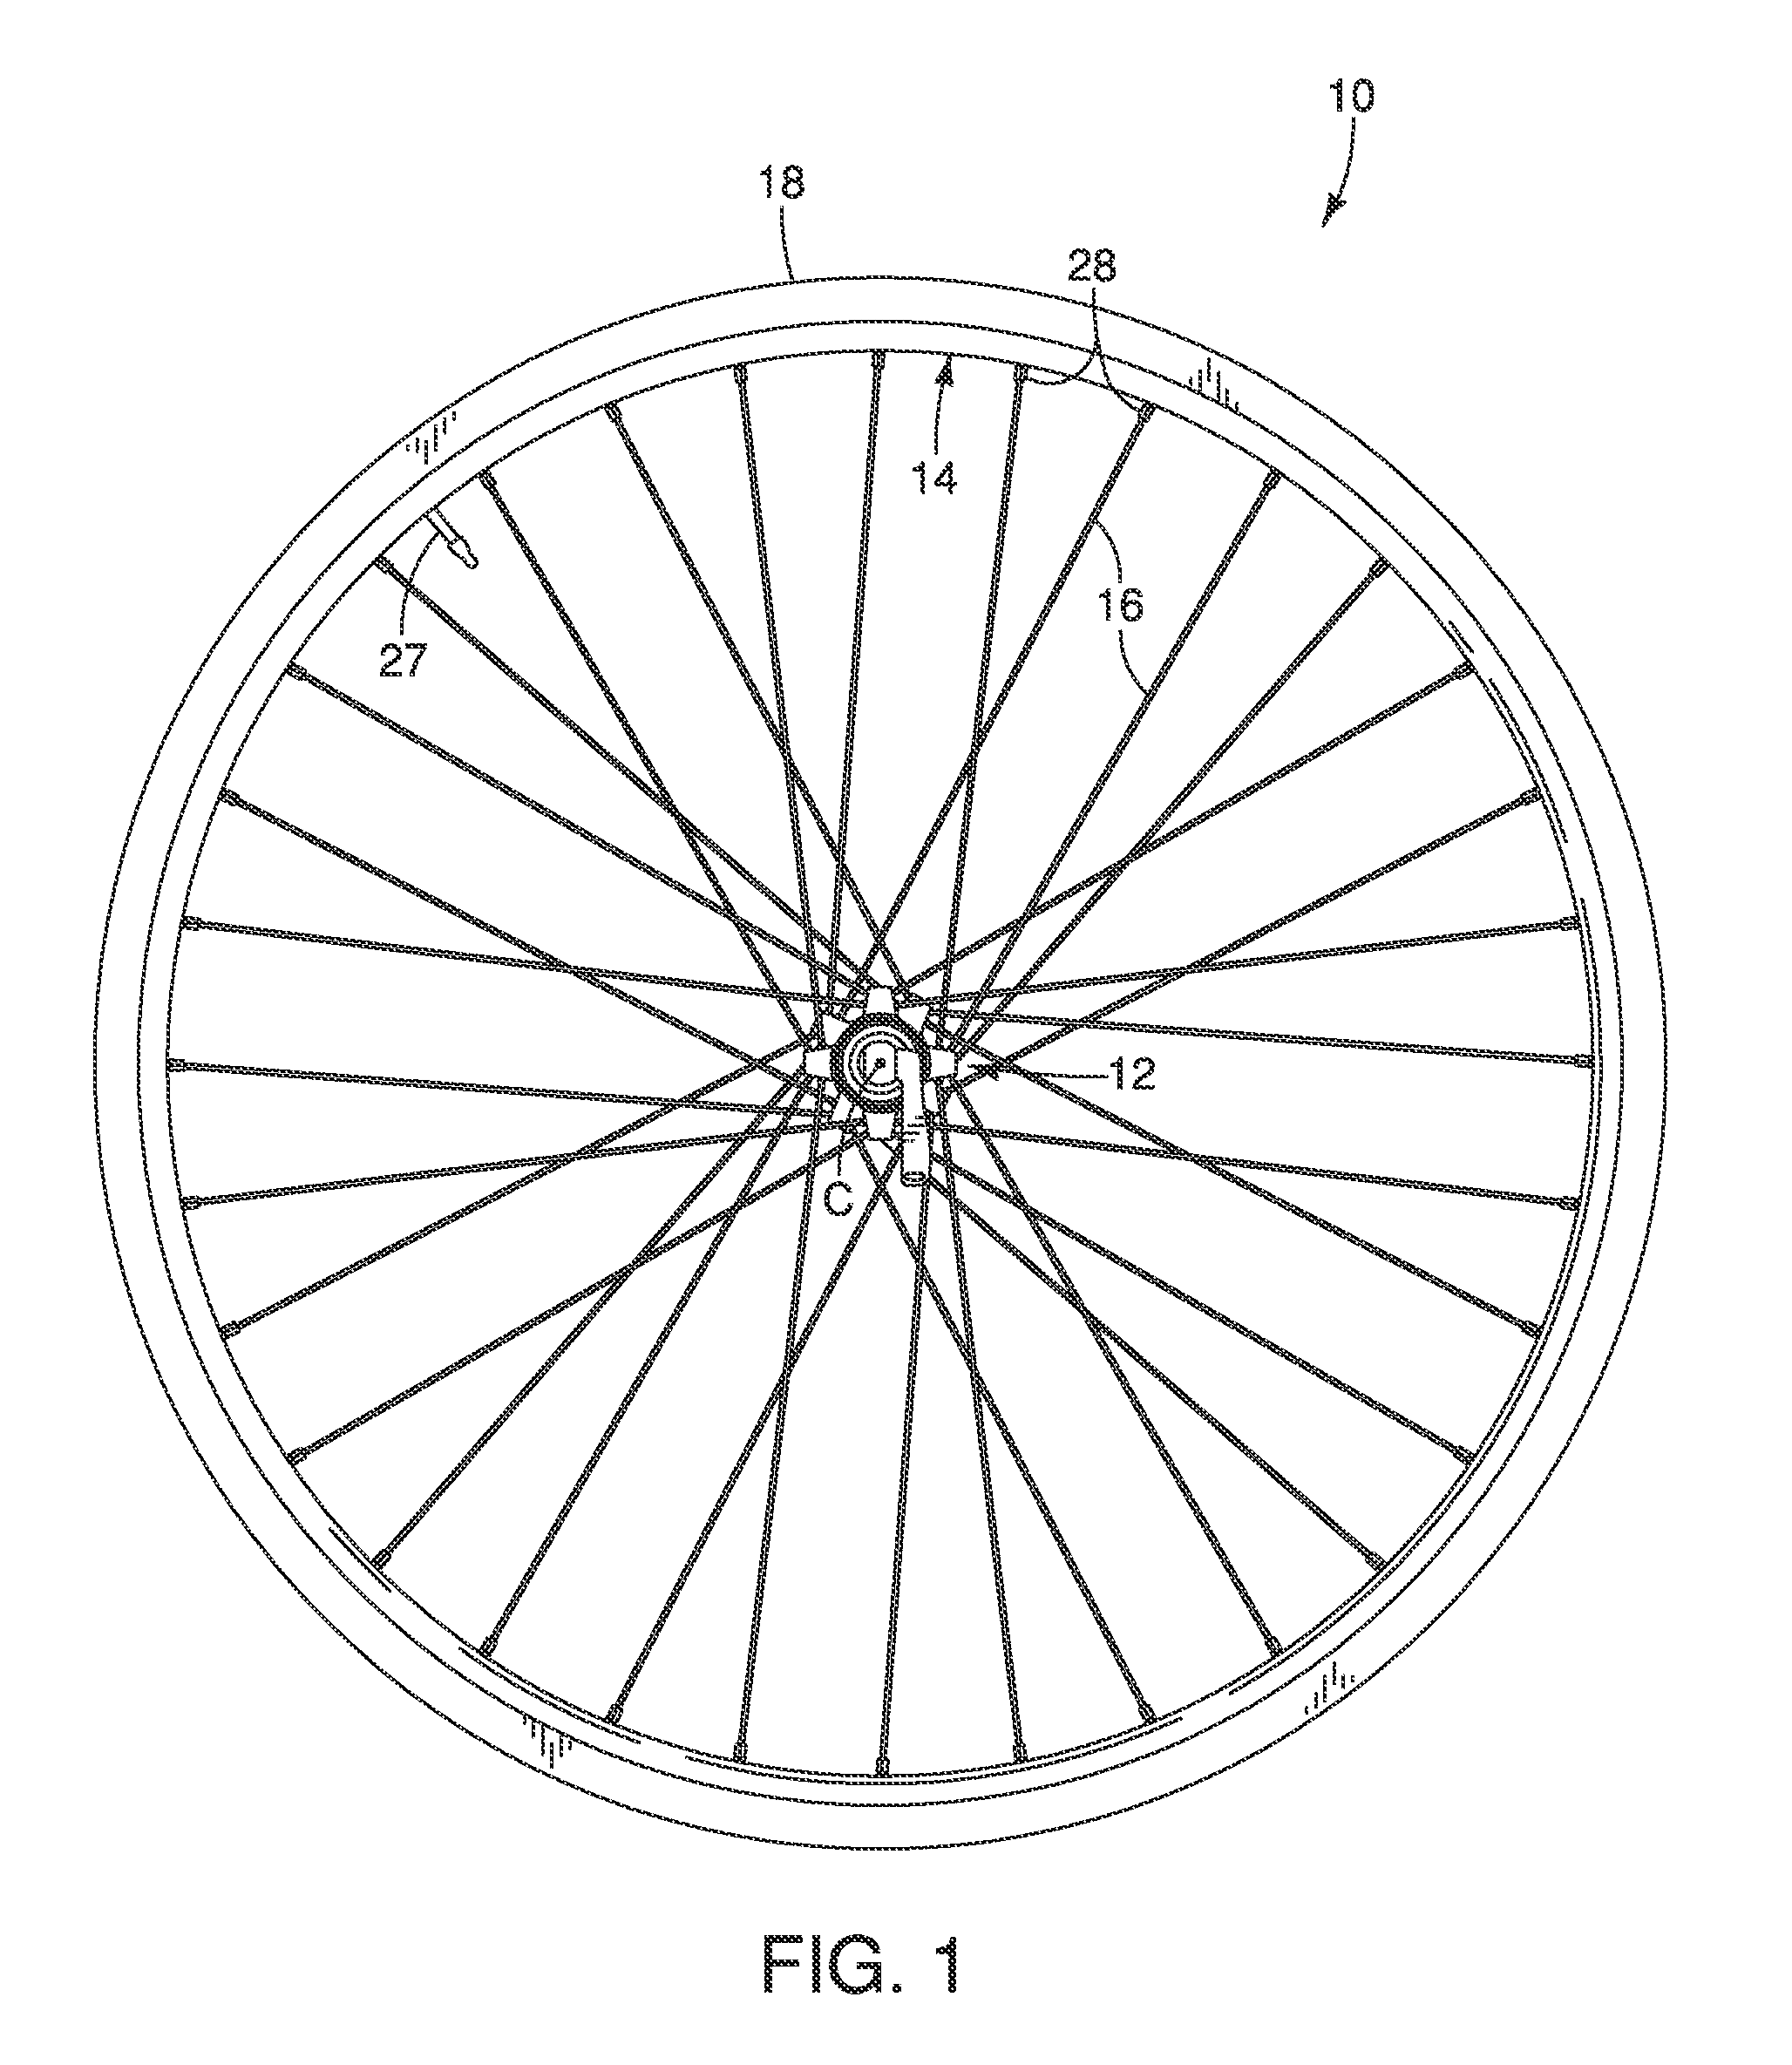 Bicycle hub and bicycle wheel